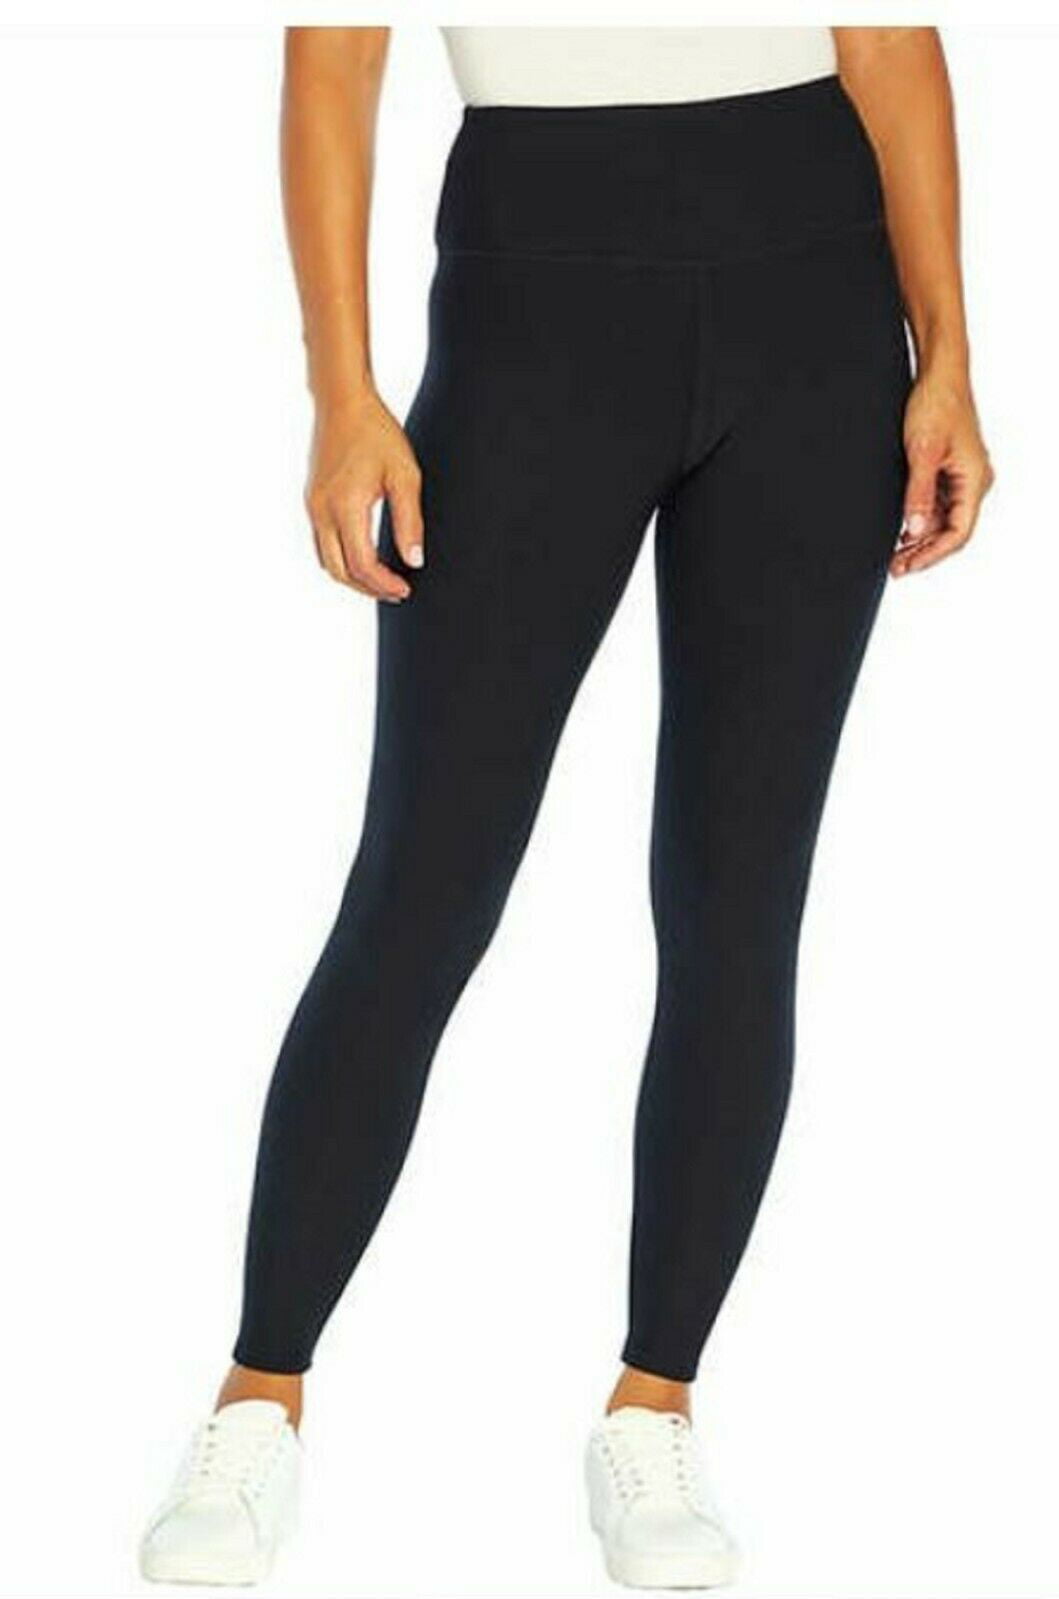 Orvis Ladies' Cozy Lined Legging (Black, 2X) - Walmart.com